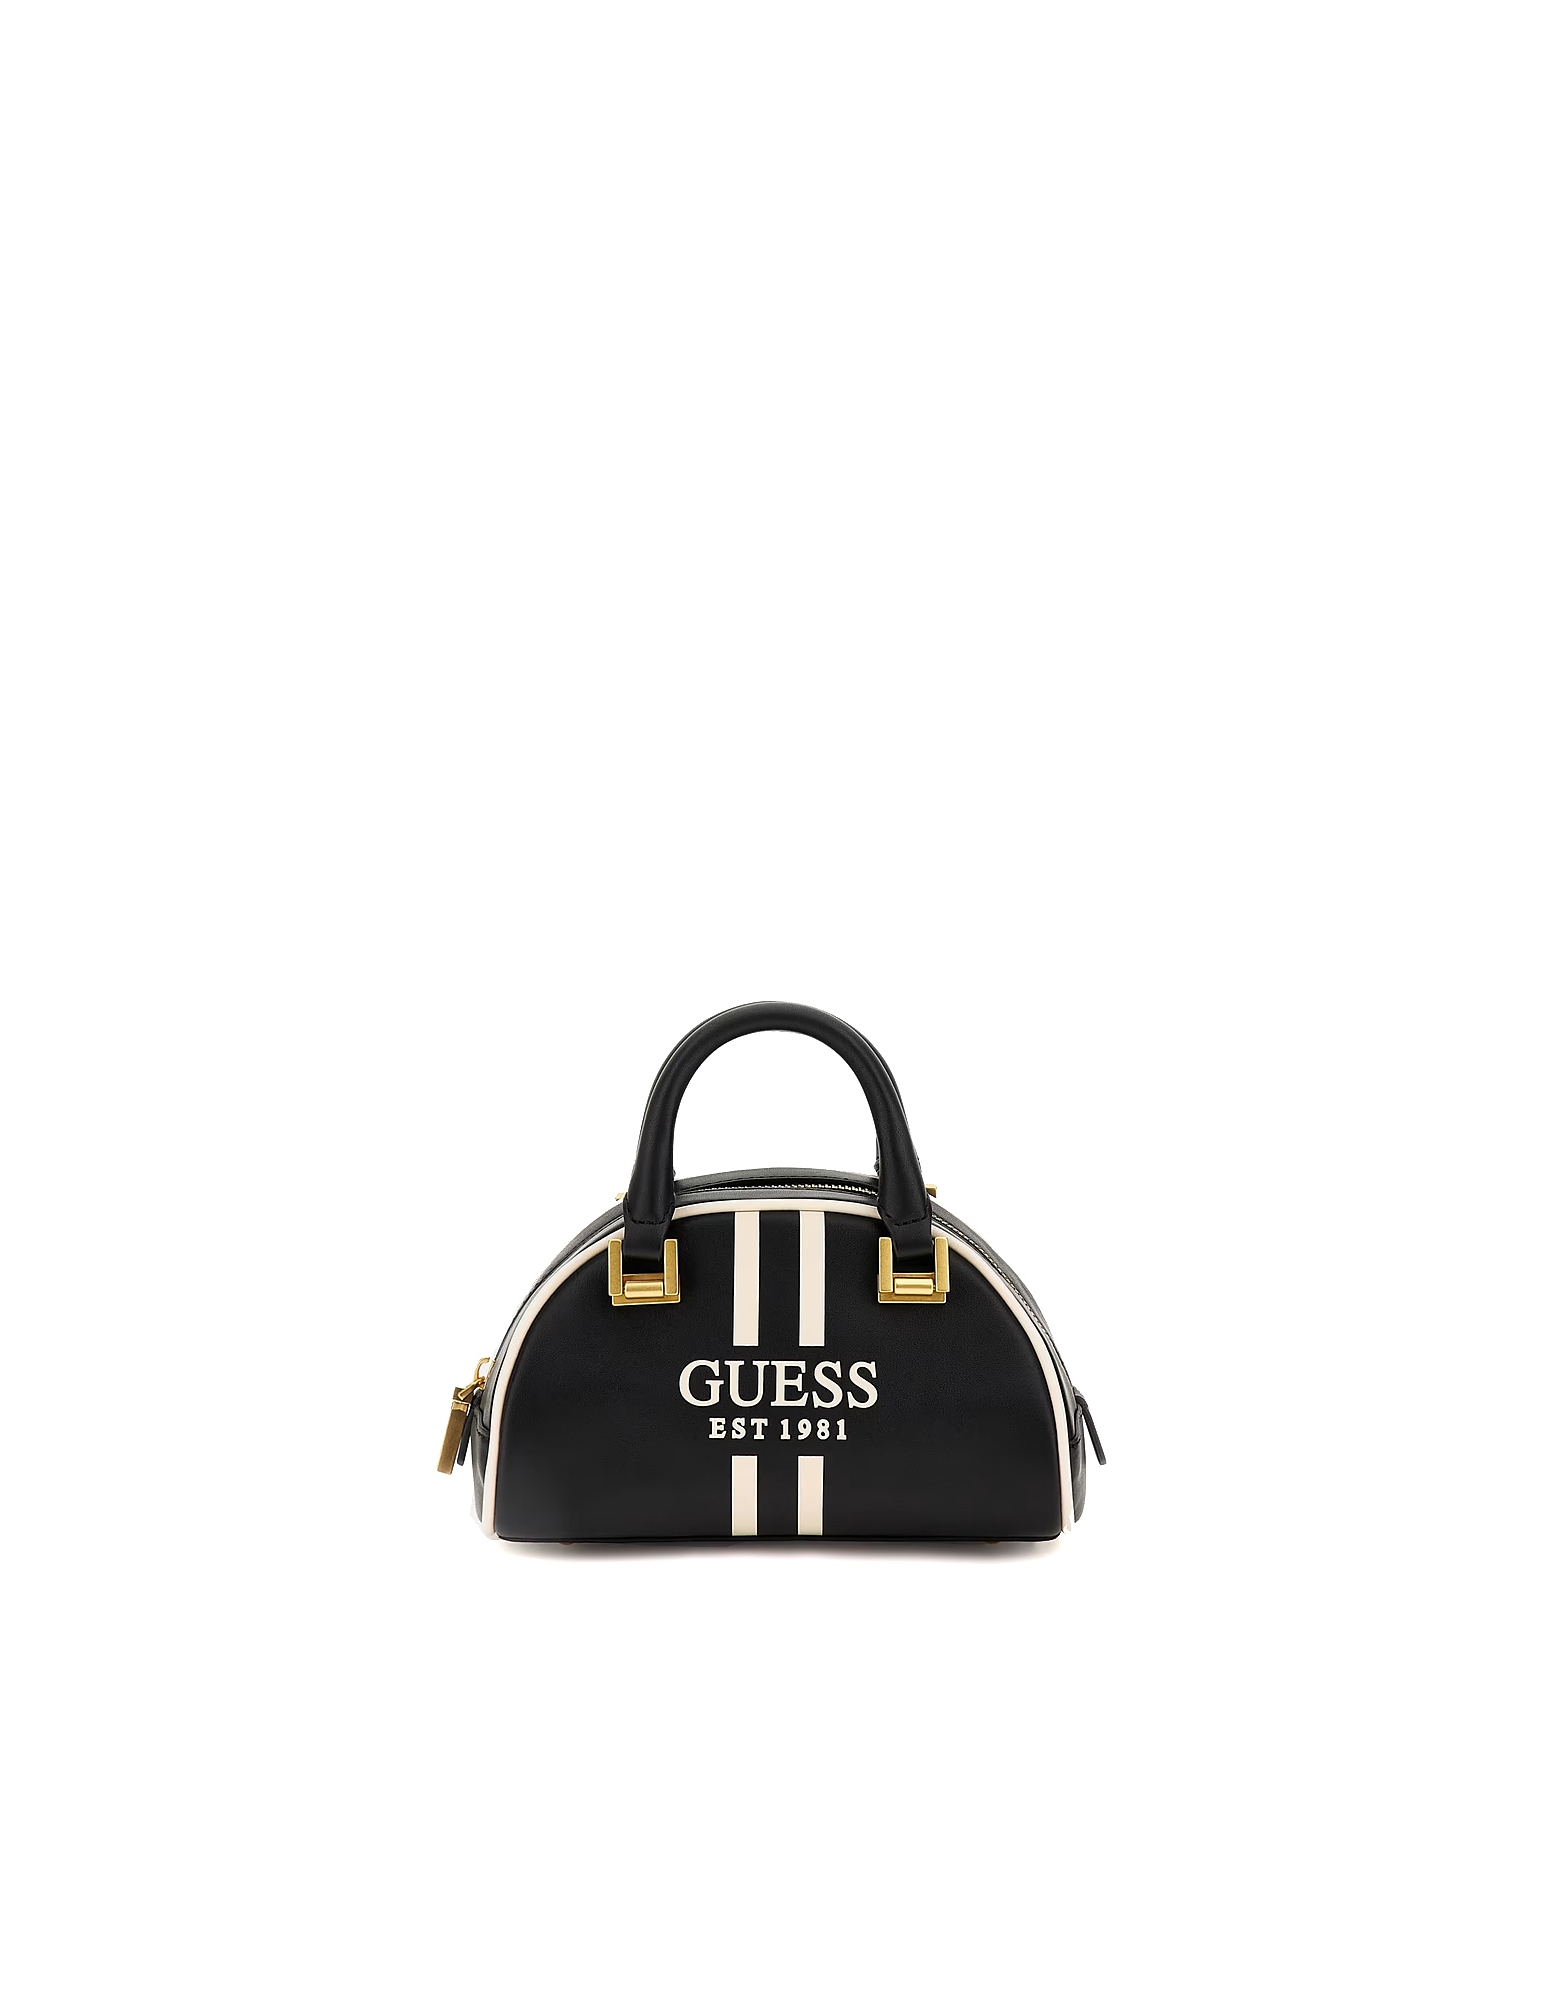 Guess Designer Handbags Women's Backpack In Black